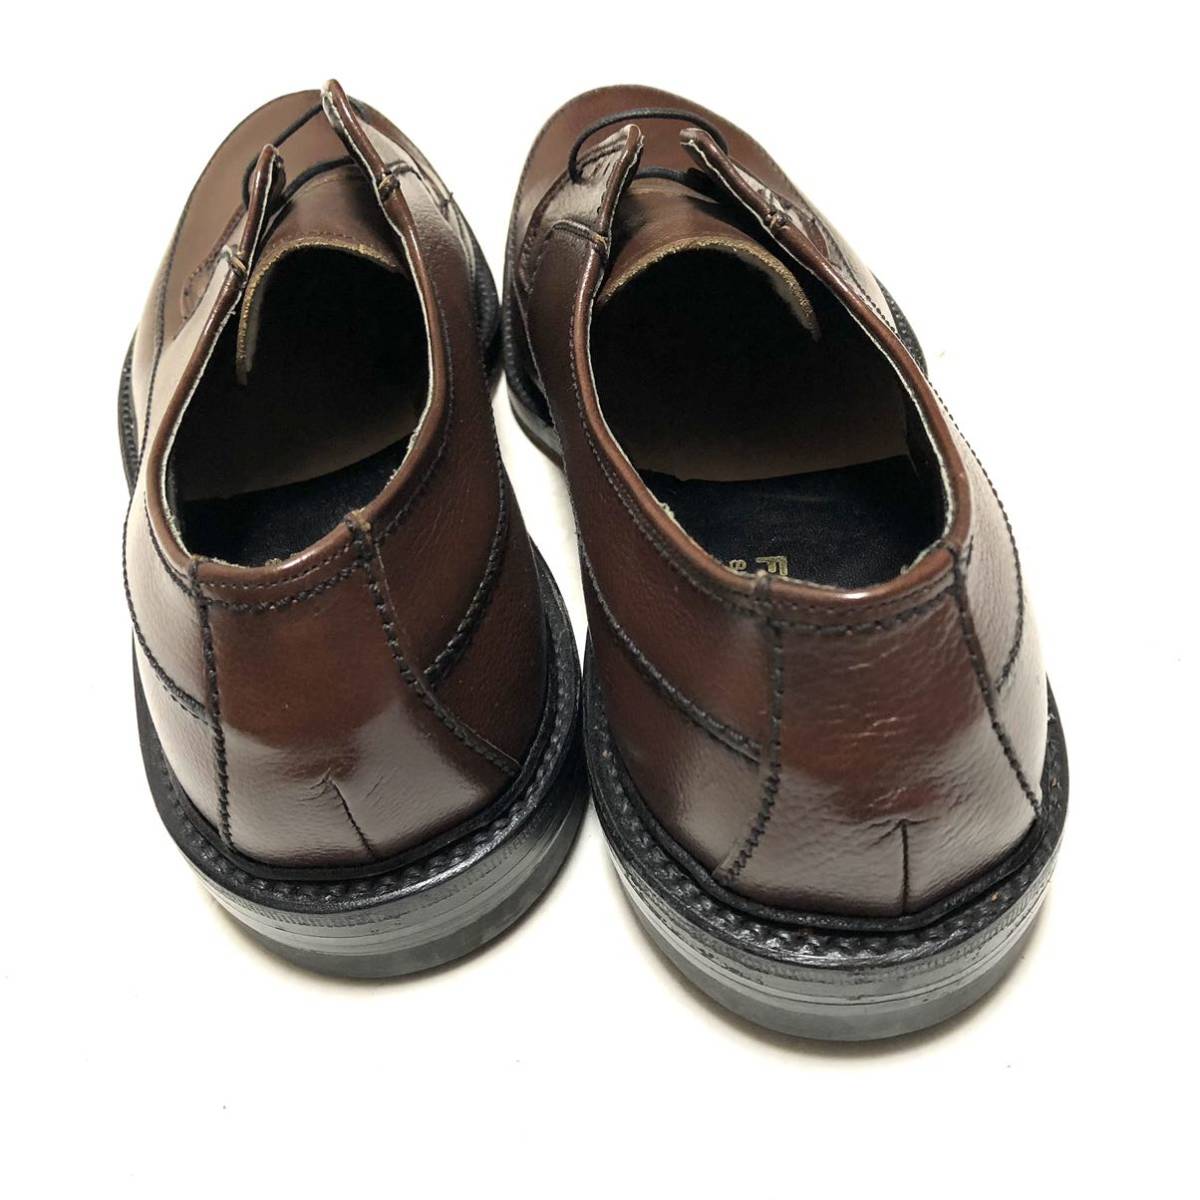 FREEMAN SHOES FOR MEN Vintage Shoes Dead Stock ビンテージシューズ